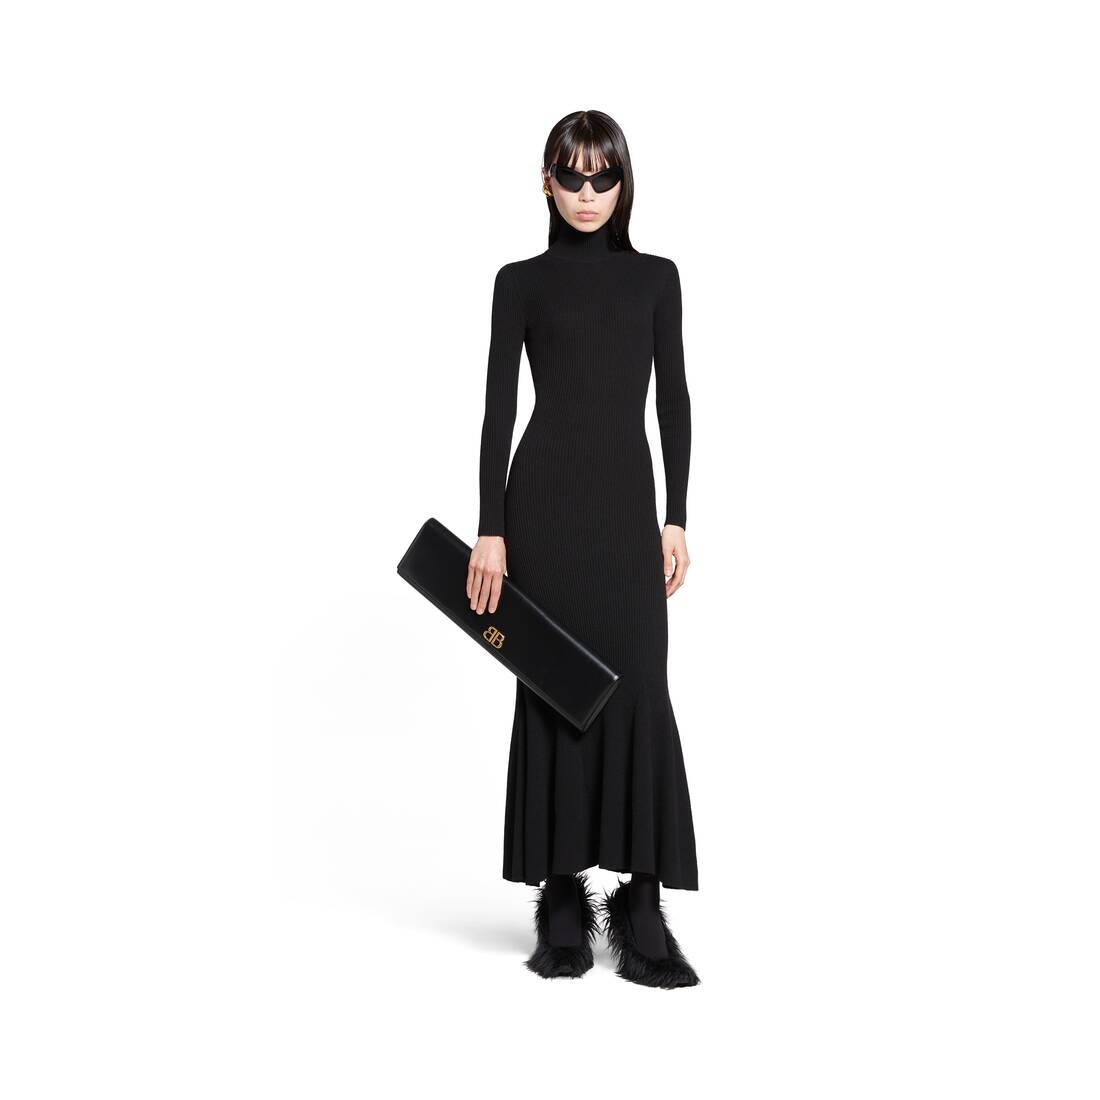 Women's Midi Dress in Black - 2